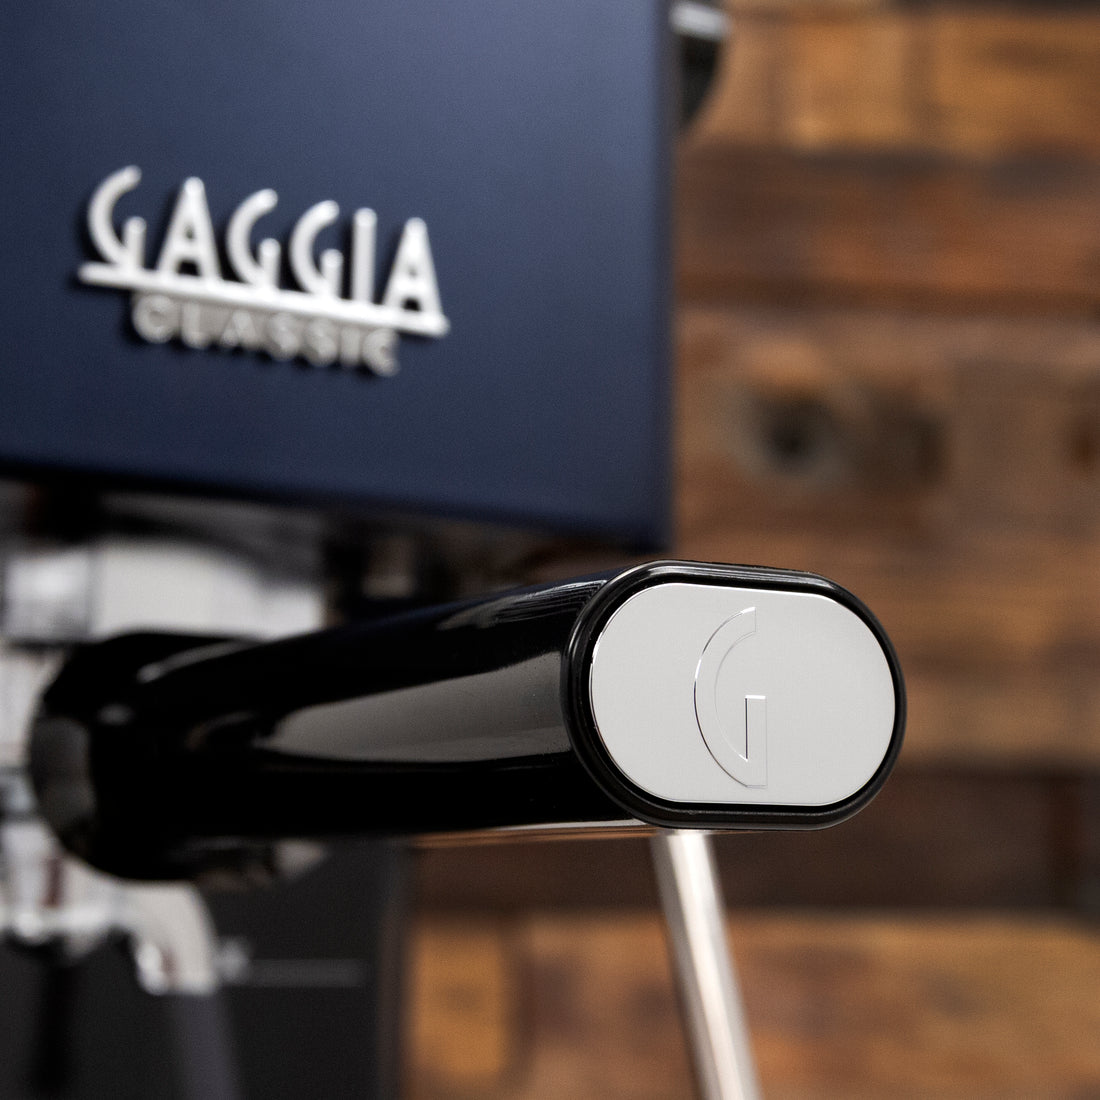 Refurbished Gaggia Classic Pro in Midnight Blue